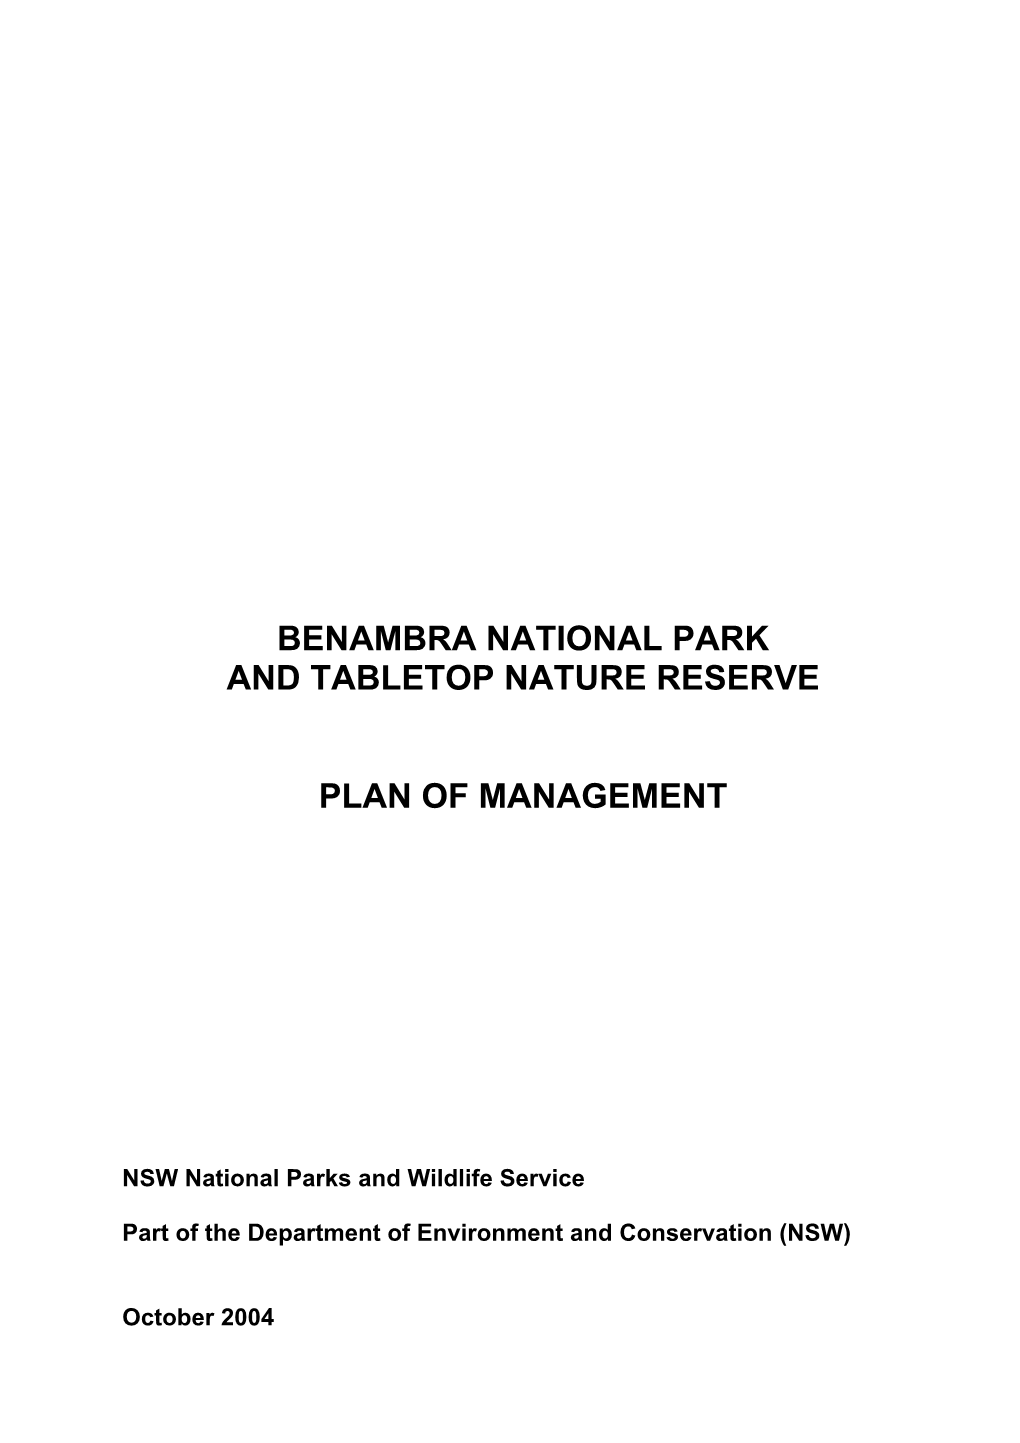 Benambra National Park and Tabletop Nature Reserve Plan of Mangement